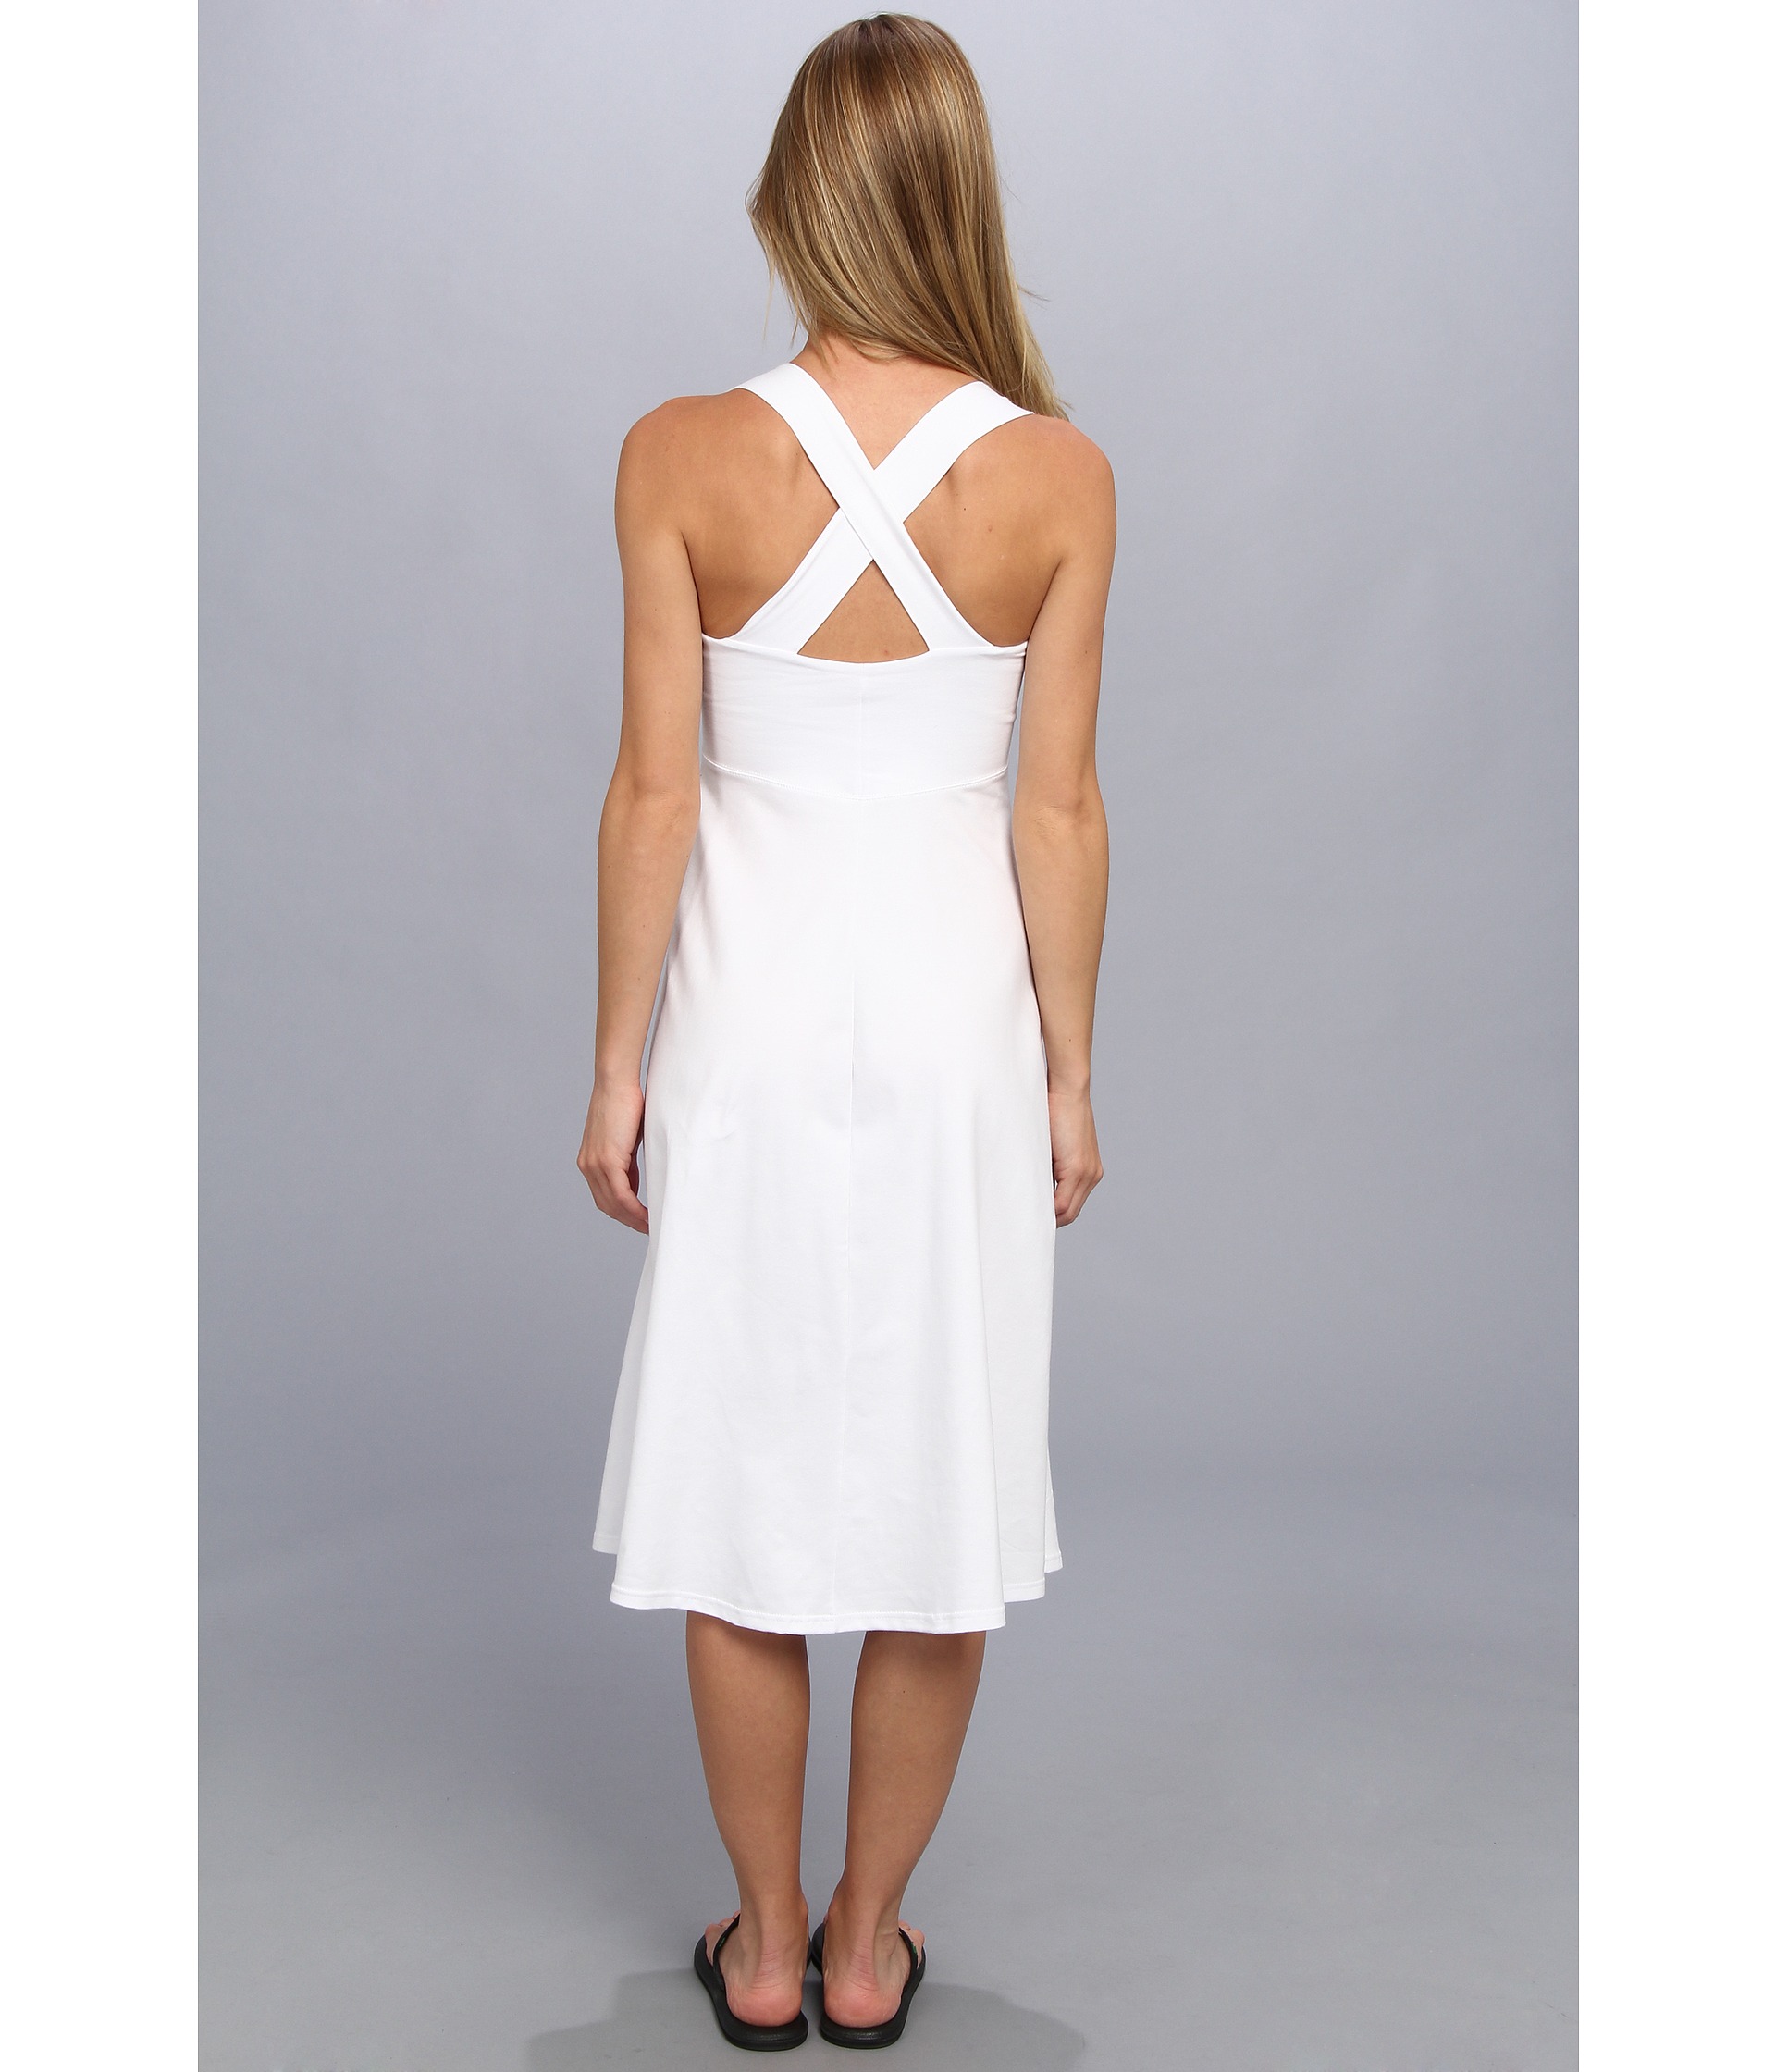 FIG Clothing Solomon Dress White - Zappos Free Shipping BOTH Ways